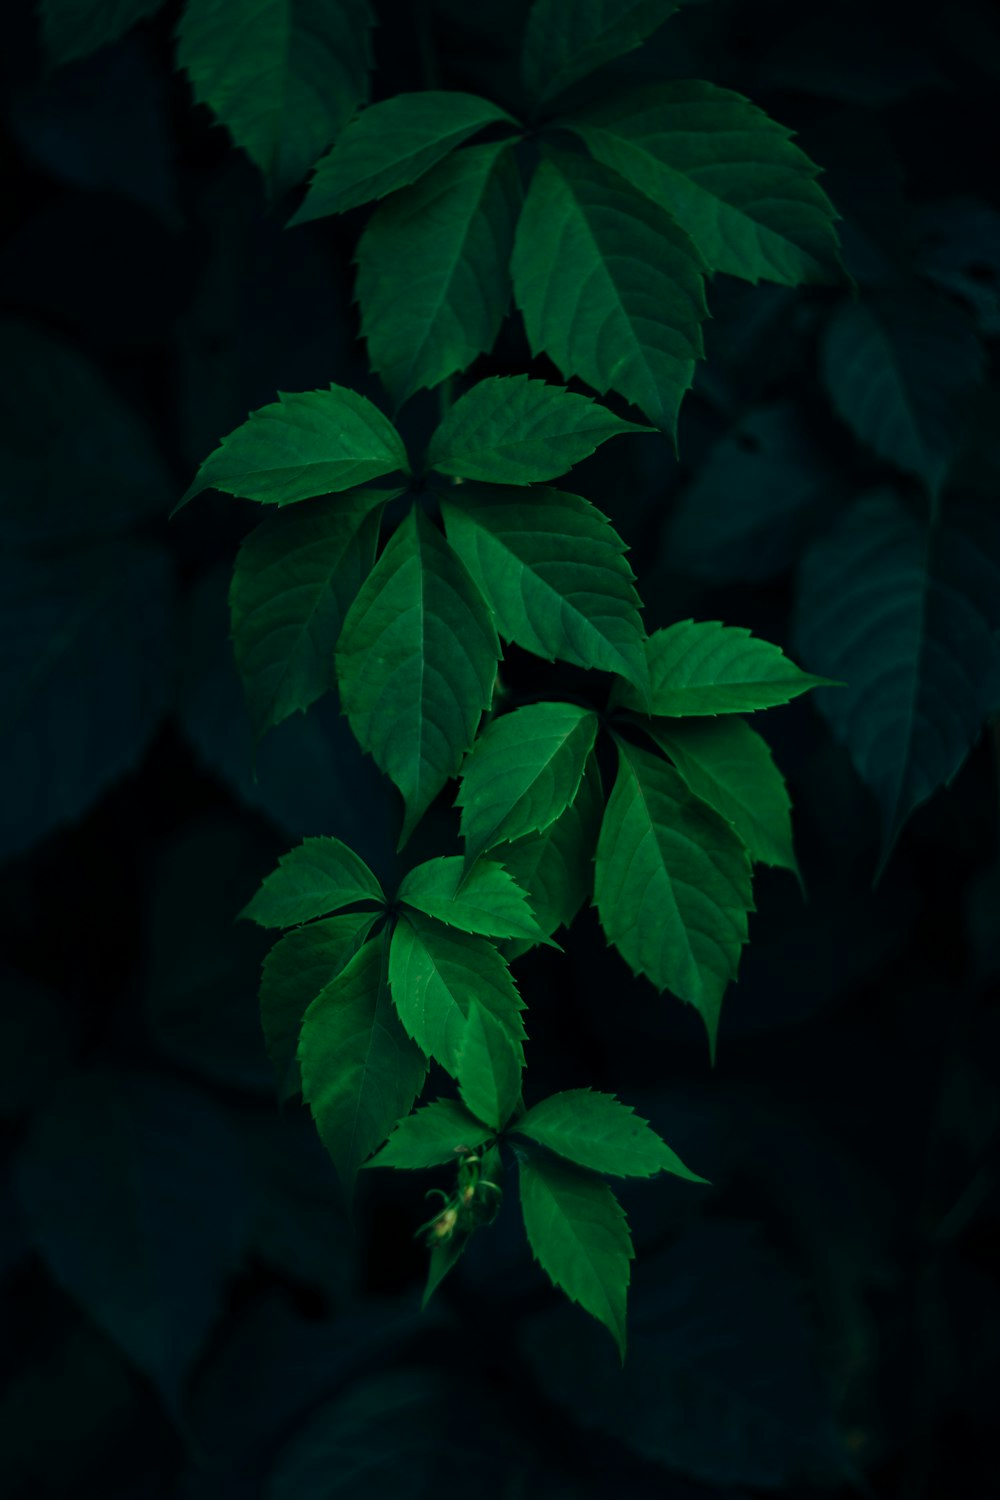 foto ravvicinata di pianta a foglia verde